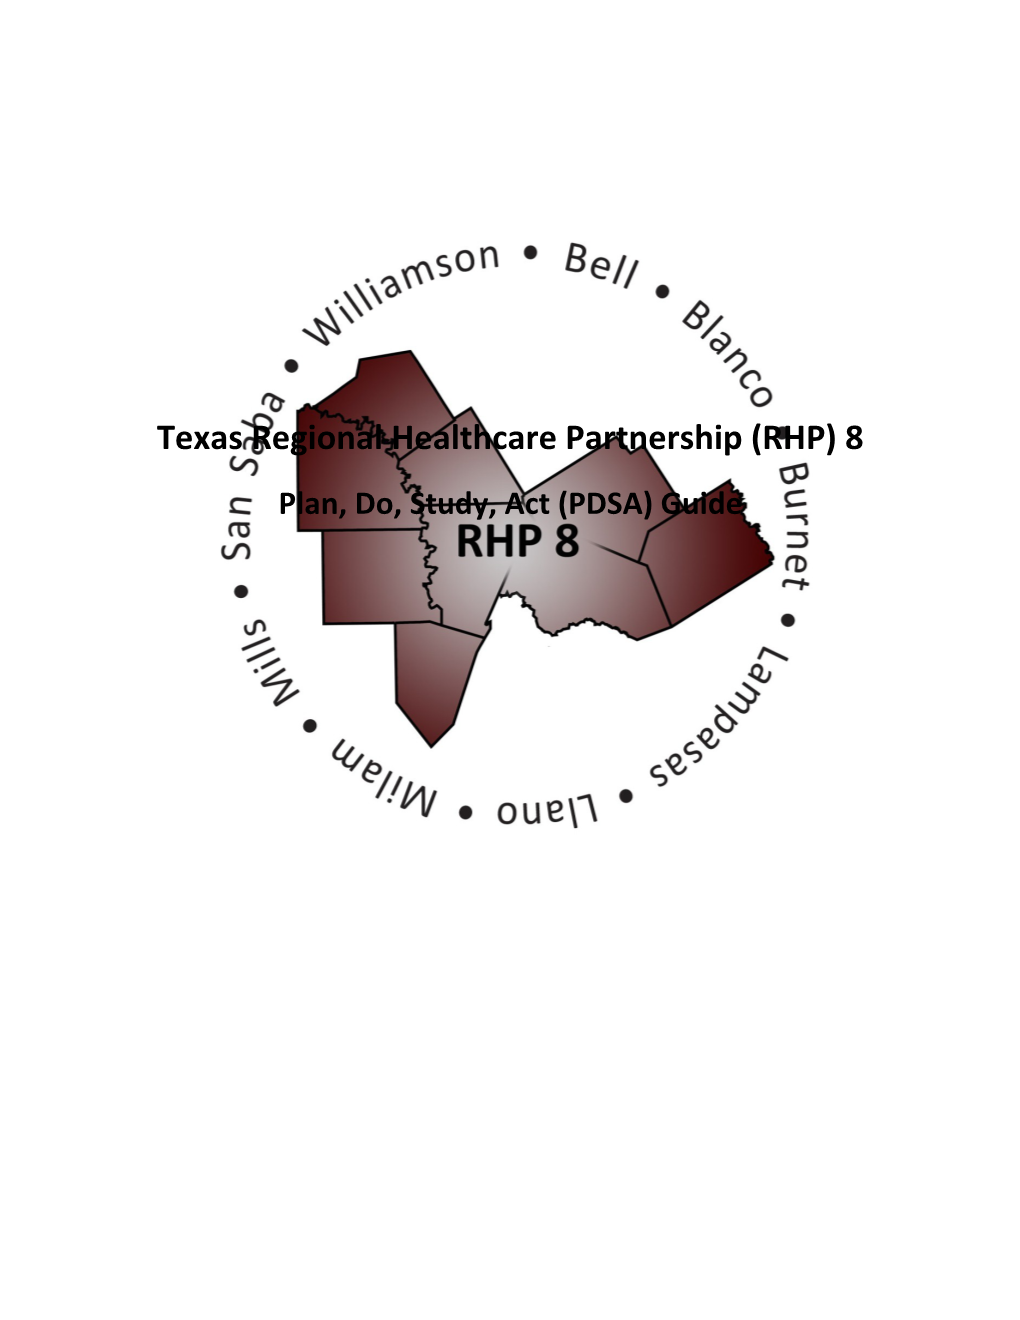 Texas Regional Healthcare Partnership (RHP) 8